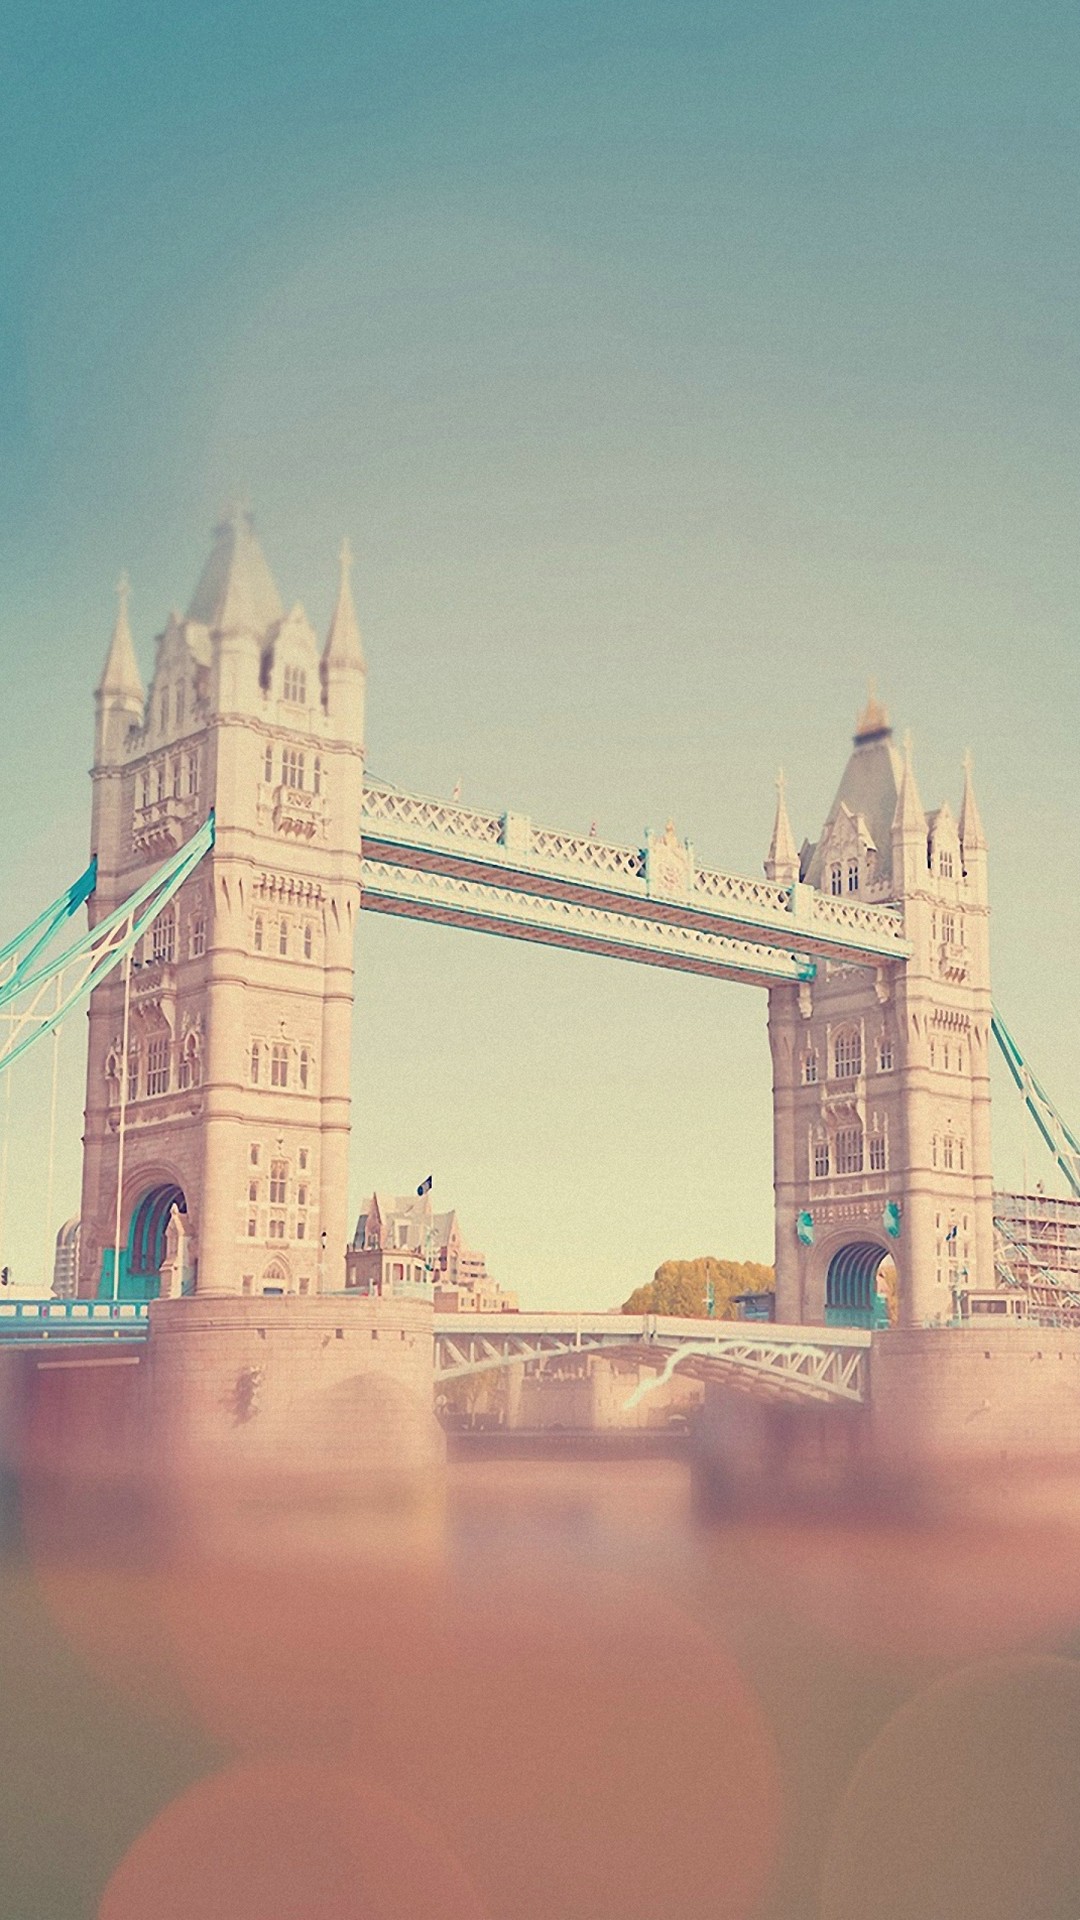 London Bridge Wallpaper Android